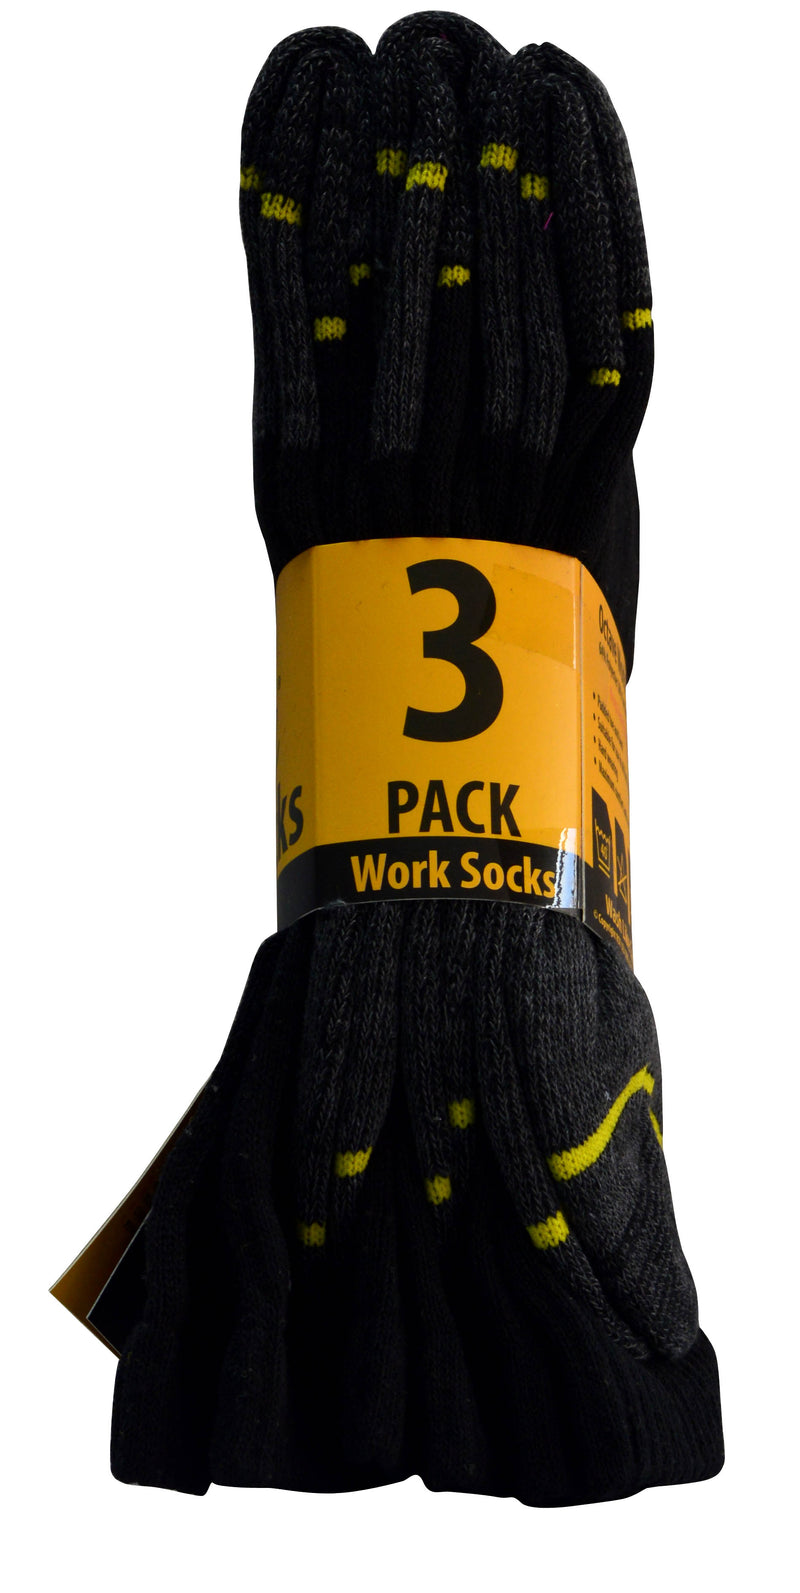 3 Pack work socks